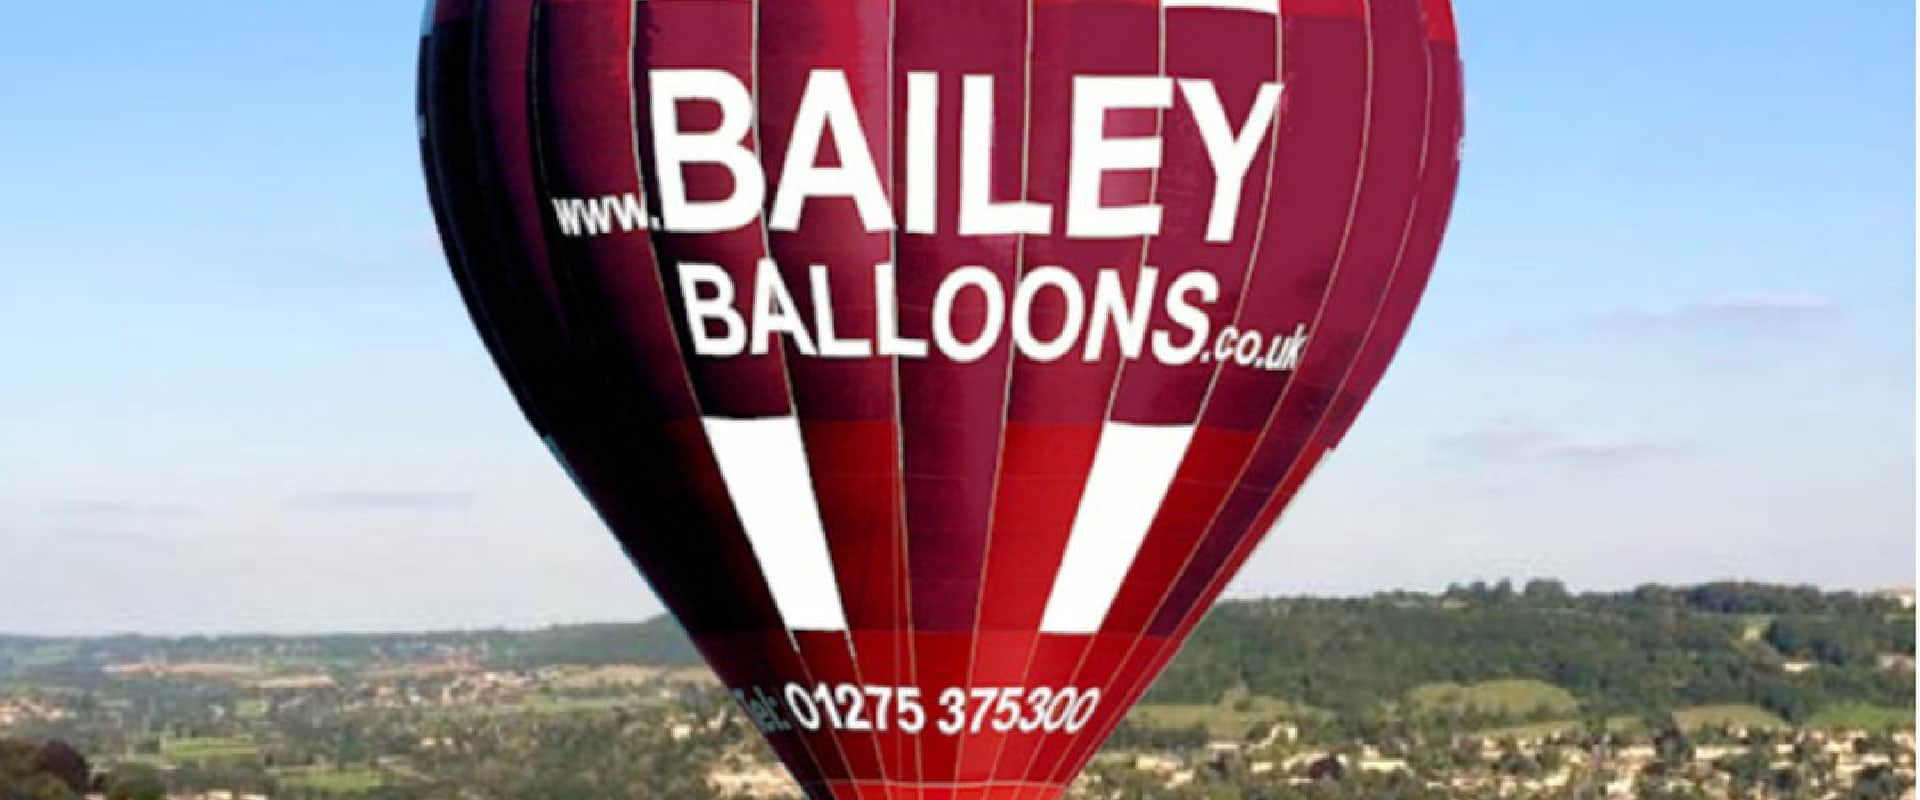 Bailey Balloons in UK